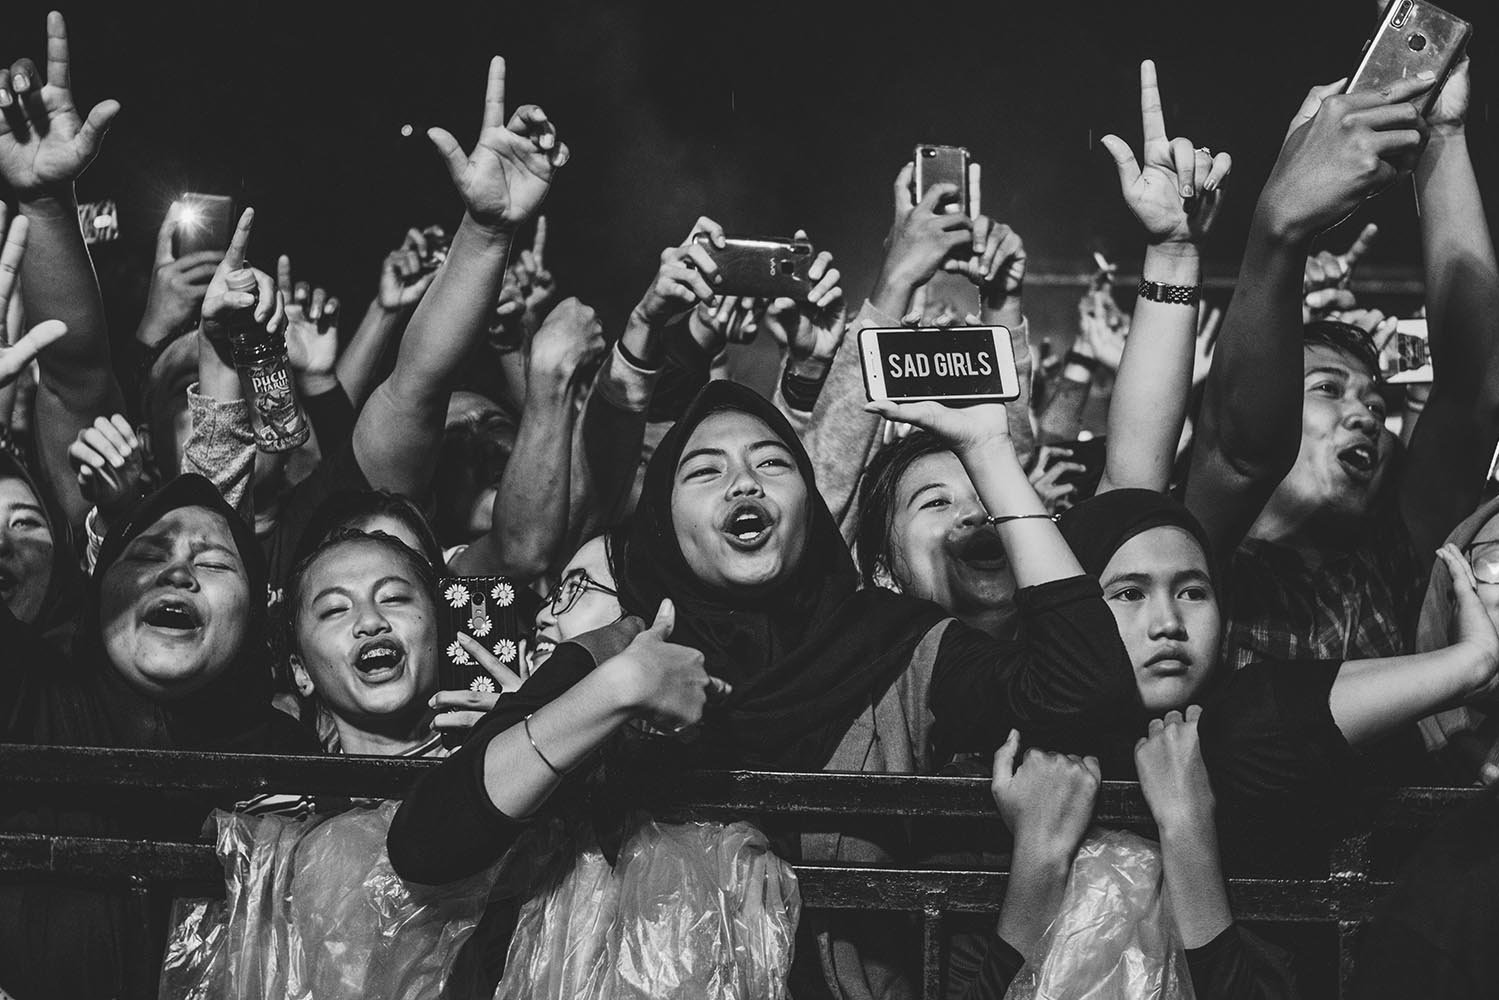 Sejumlah penggemar bergoyang menikmati aksi panggung penyanyi campursari Didi Kempot saat konser di Tigaraksa, Tangerang, Banten. 